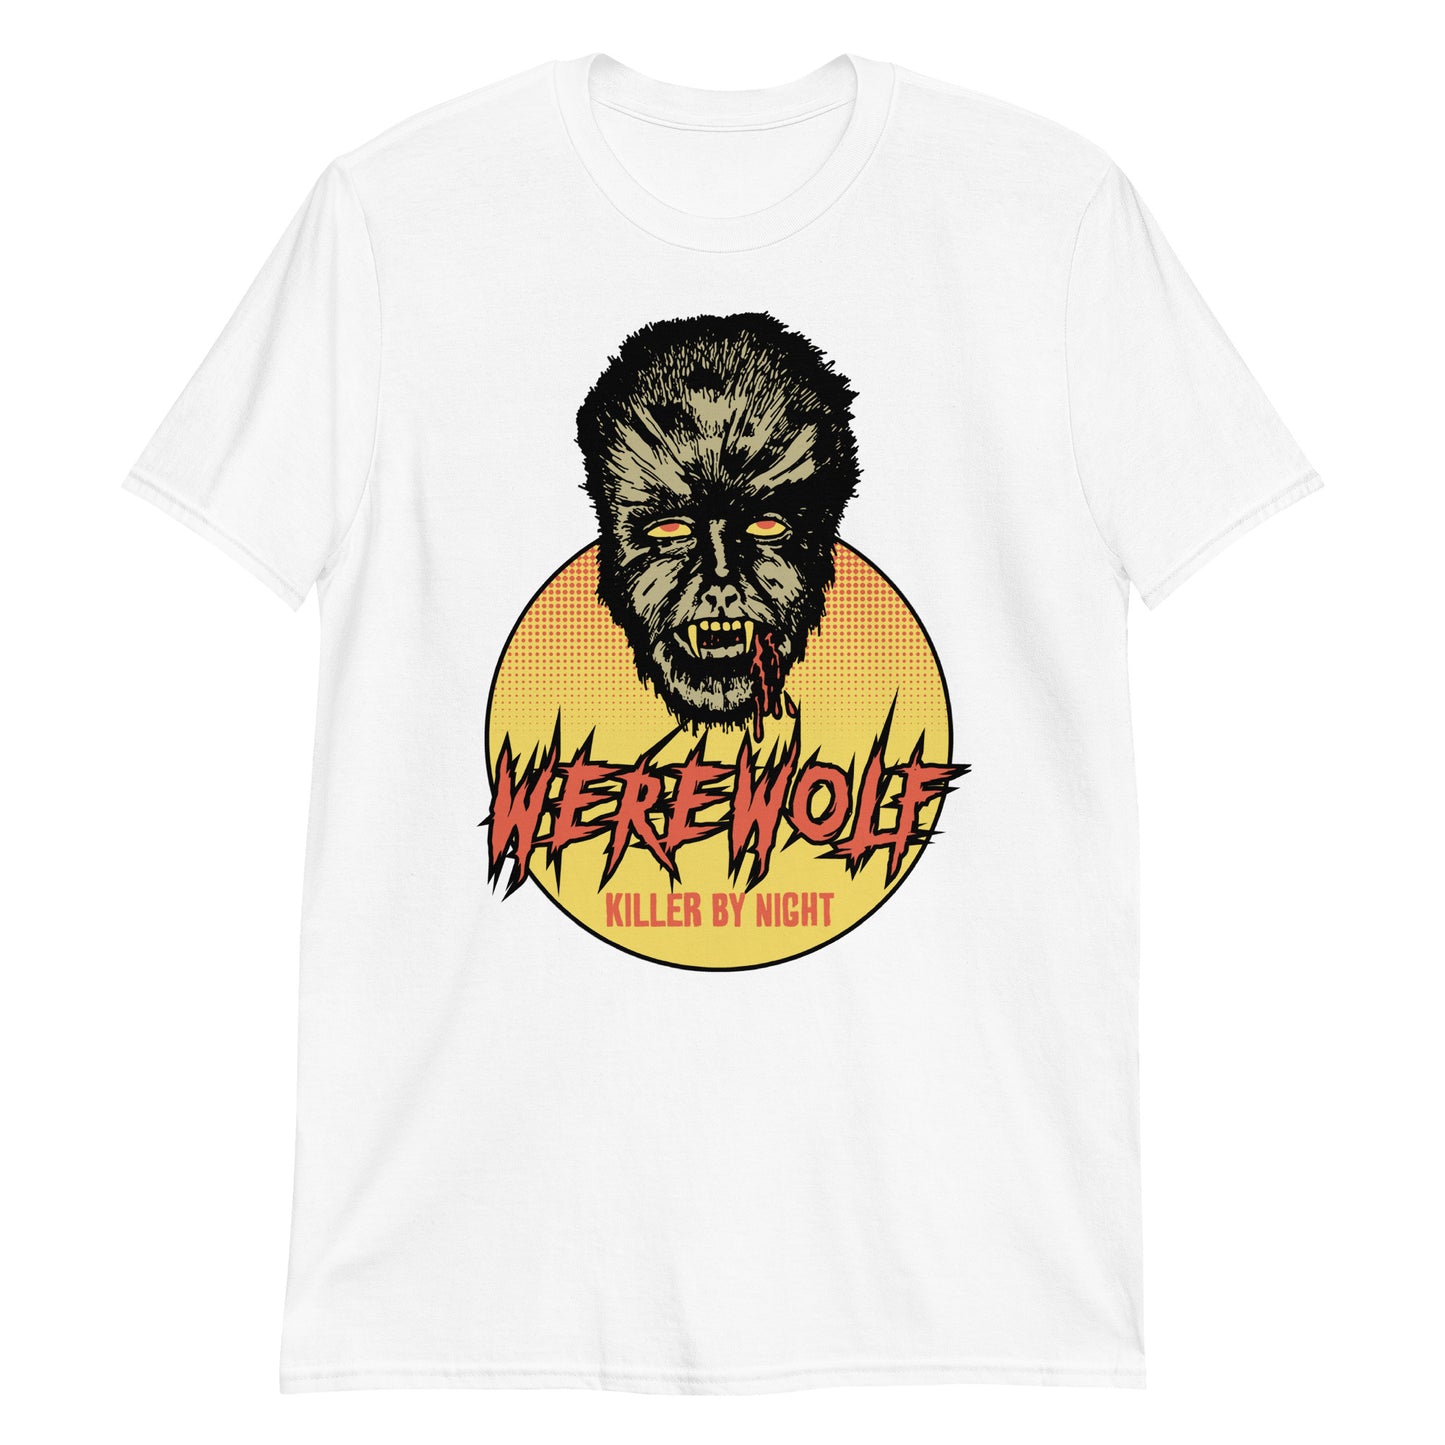 Werewolf Killer by Night - Short-Sleeve Unisex T-Shirt